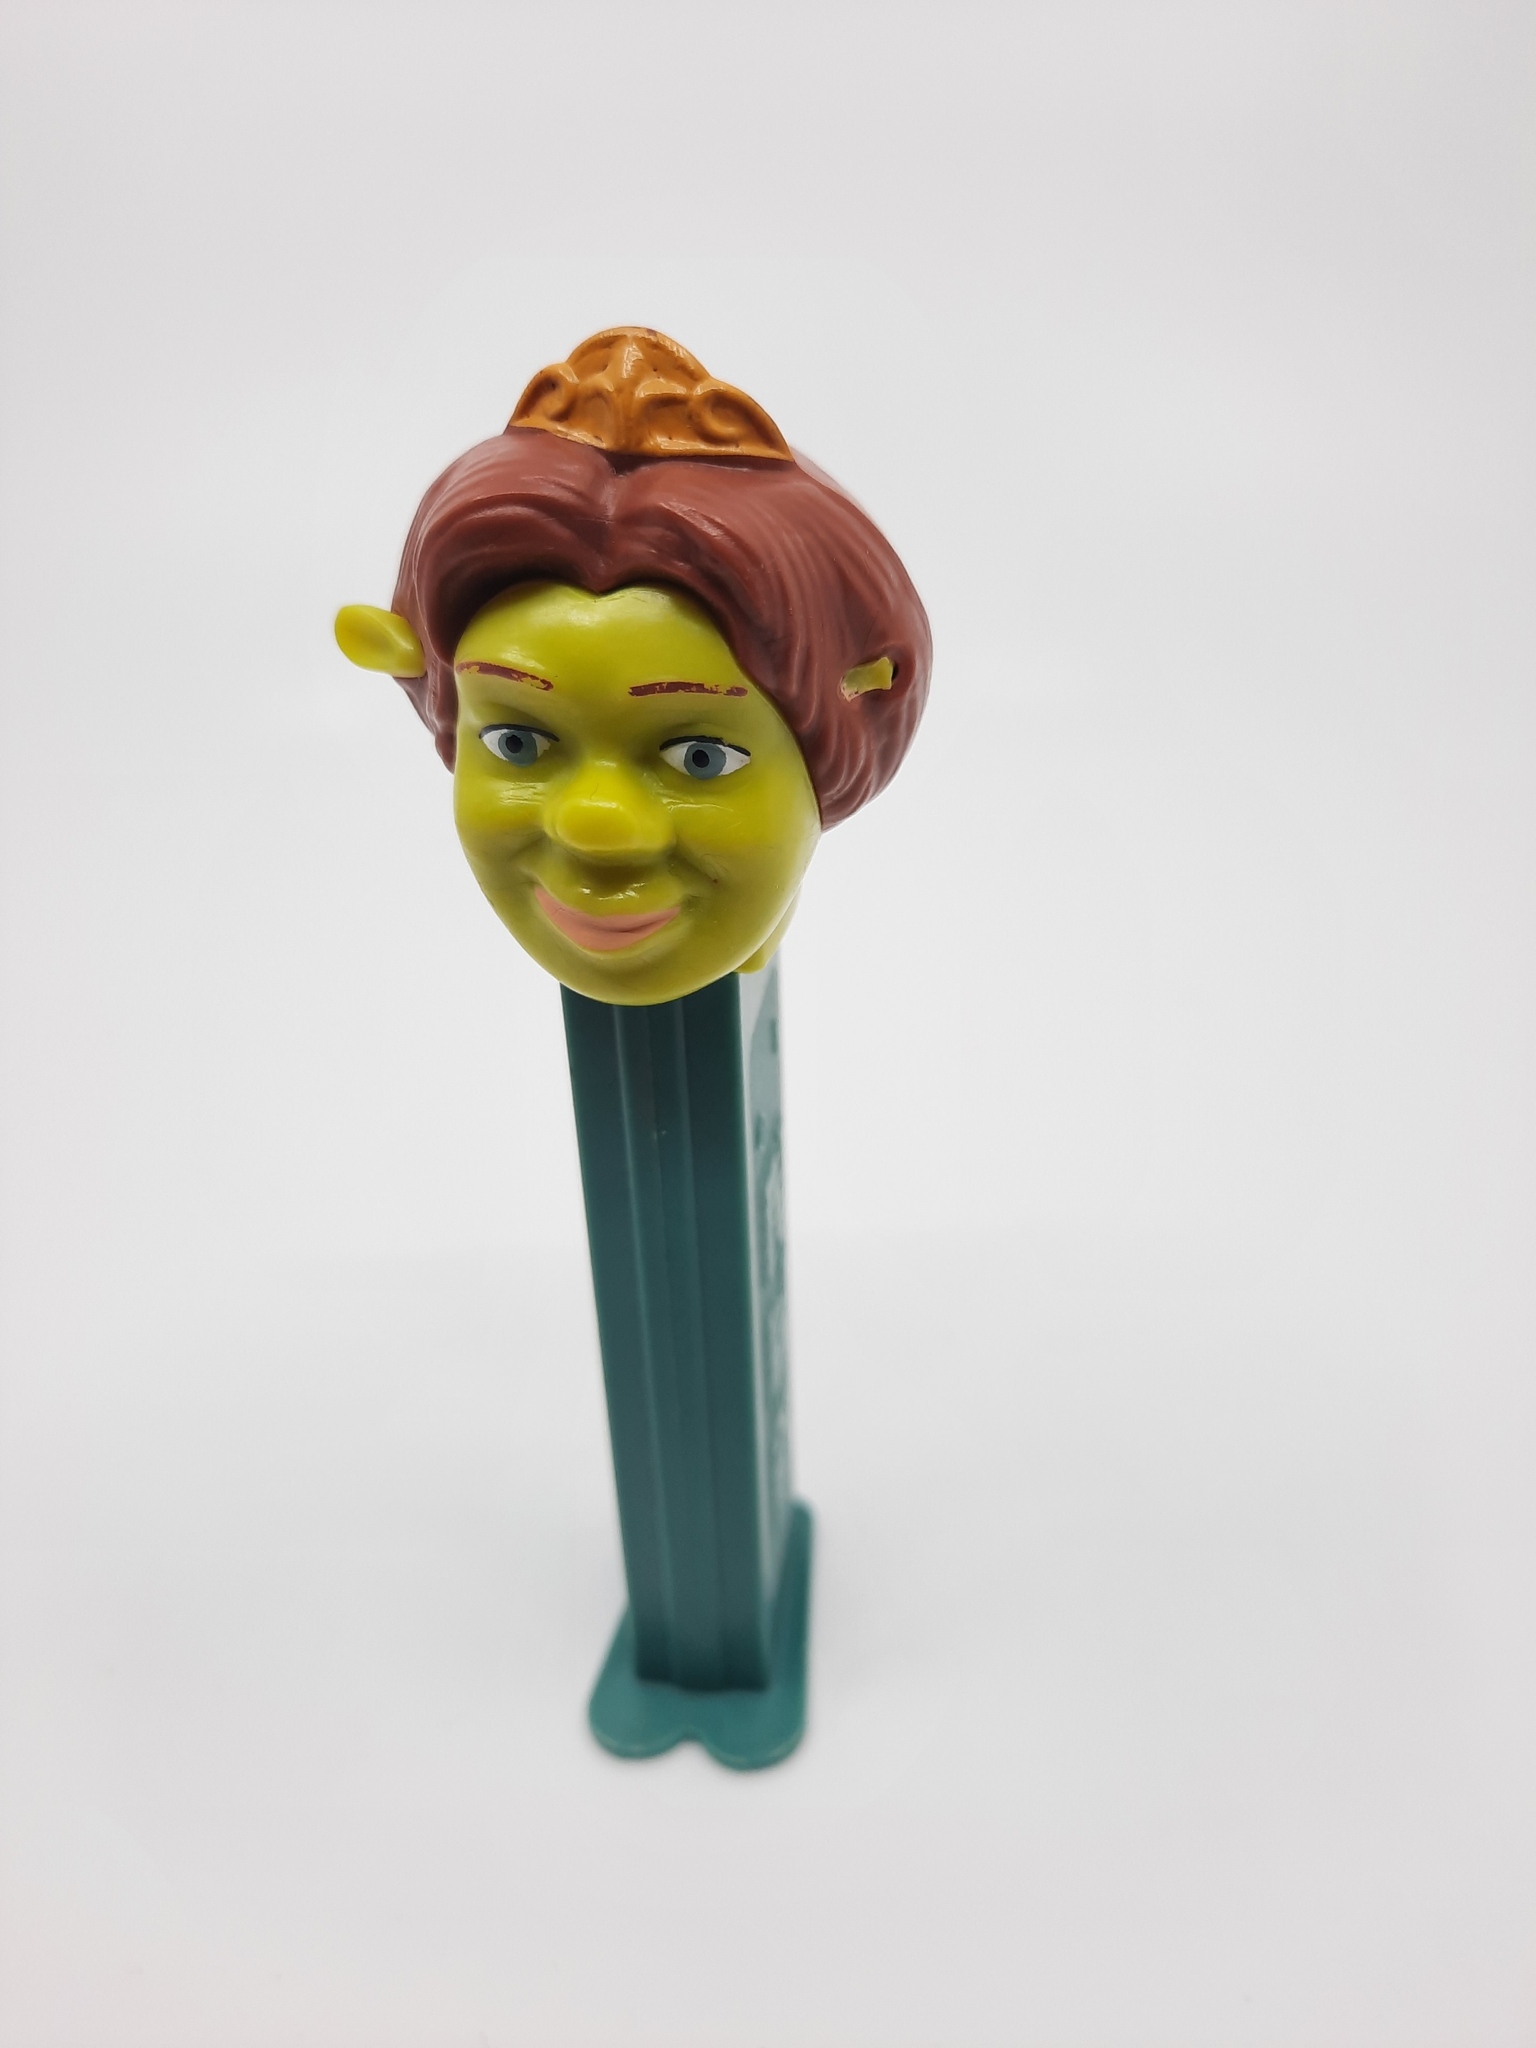 Pez dispenser - Fiona / Shrek